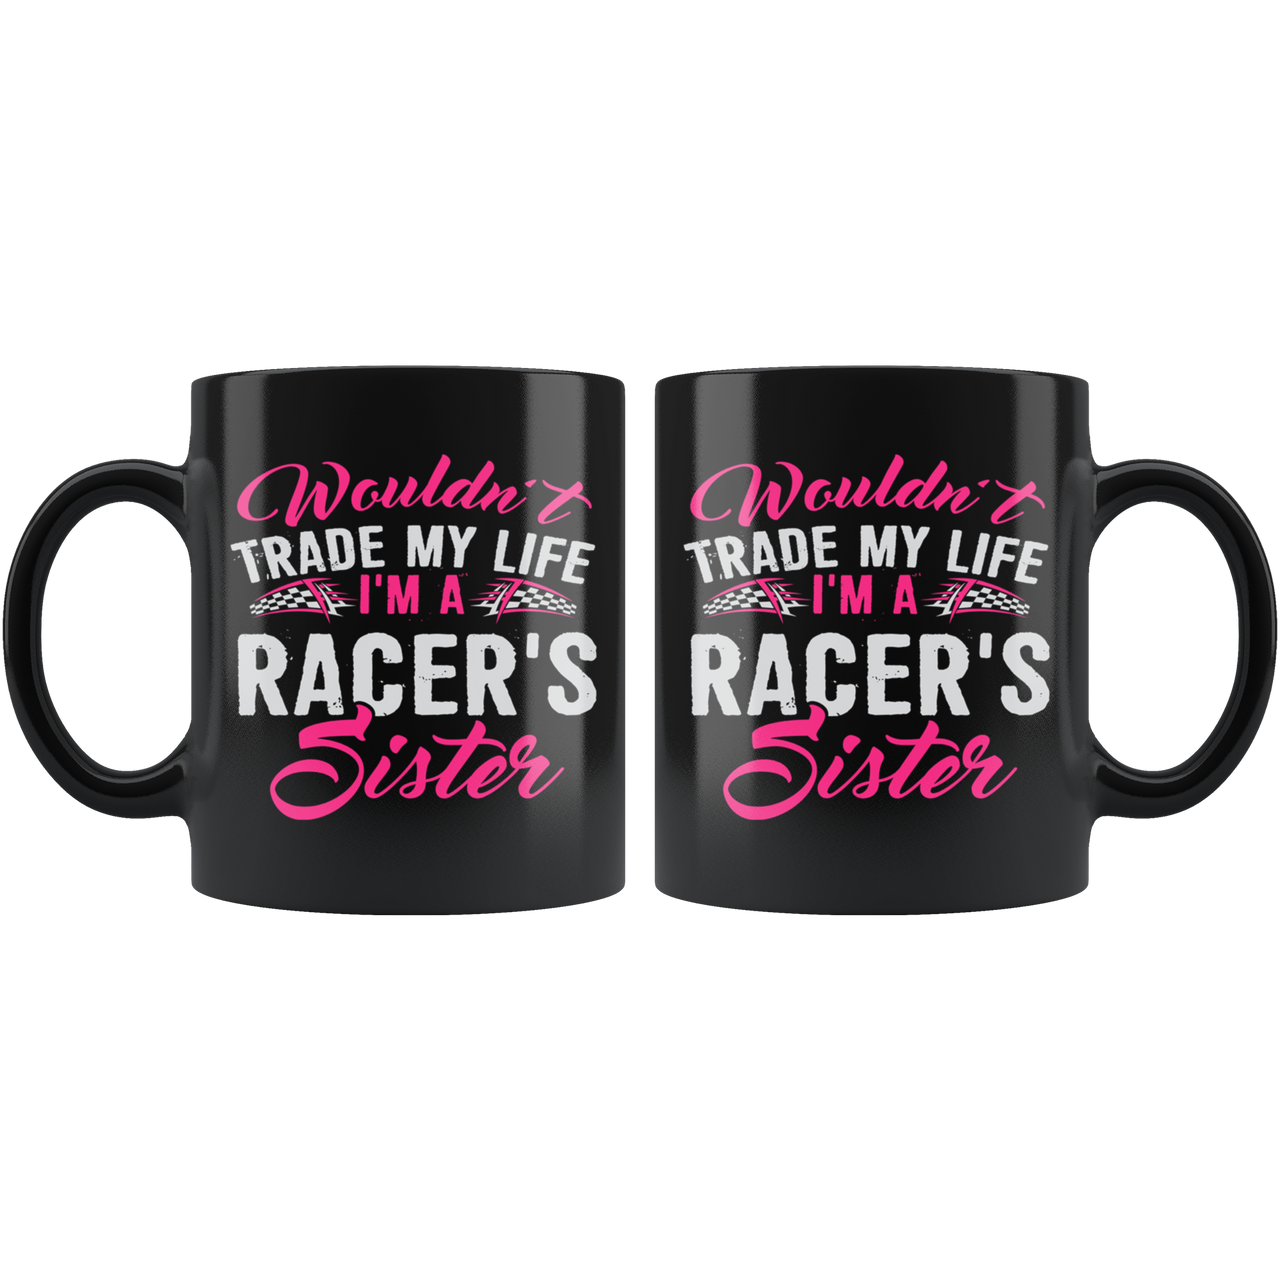 Wouldn't Trade My Life I'm A Racer's Sister Mug!